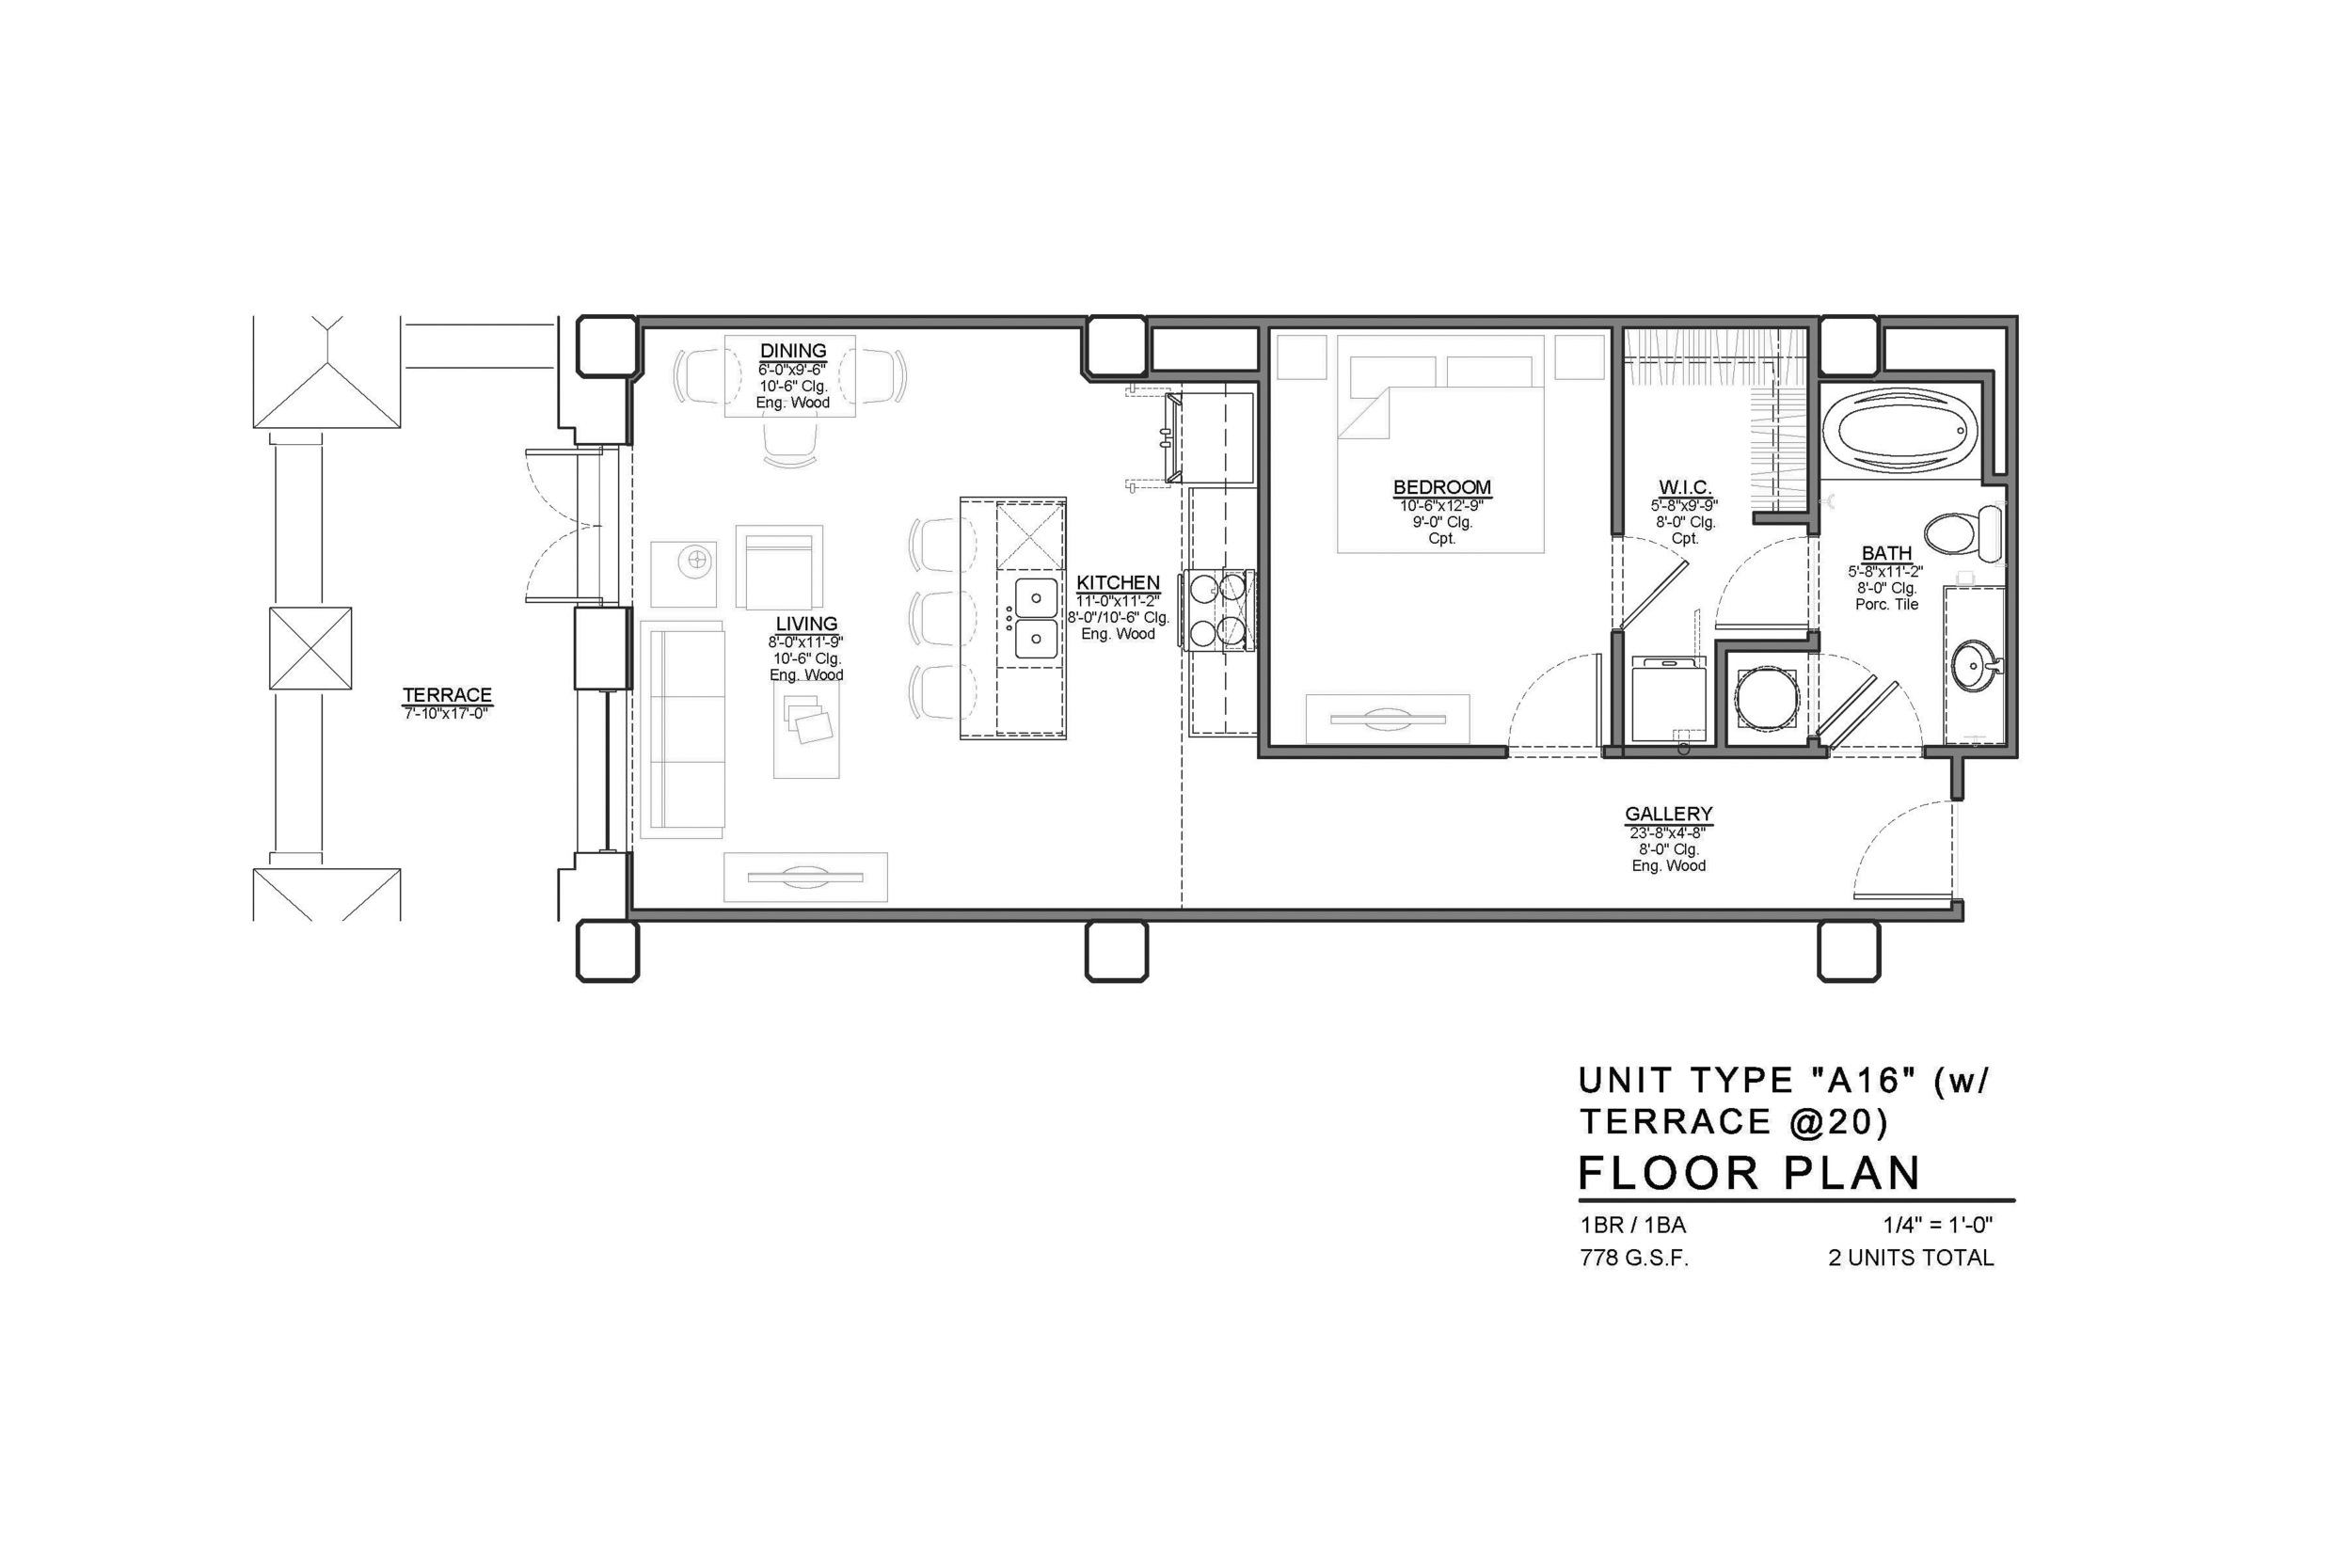 A16 FLOOR PLAN: 1 BEDROOM / 1 BATH